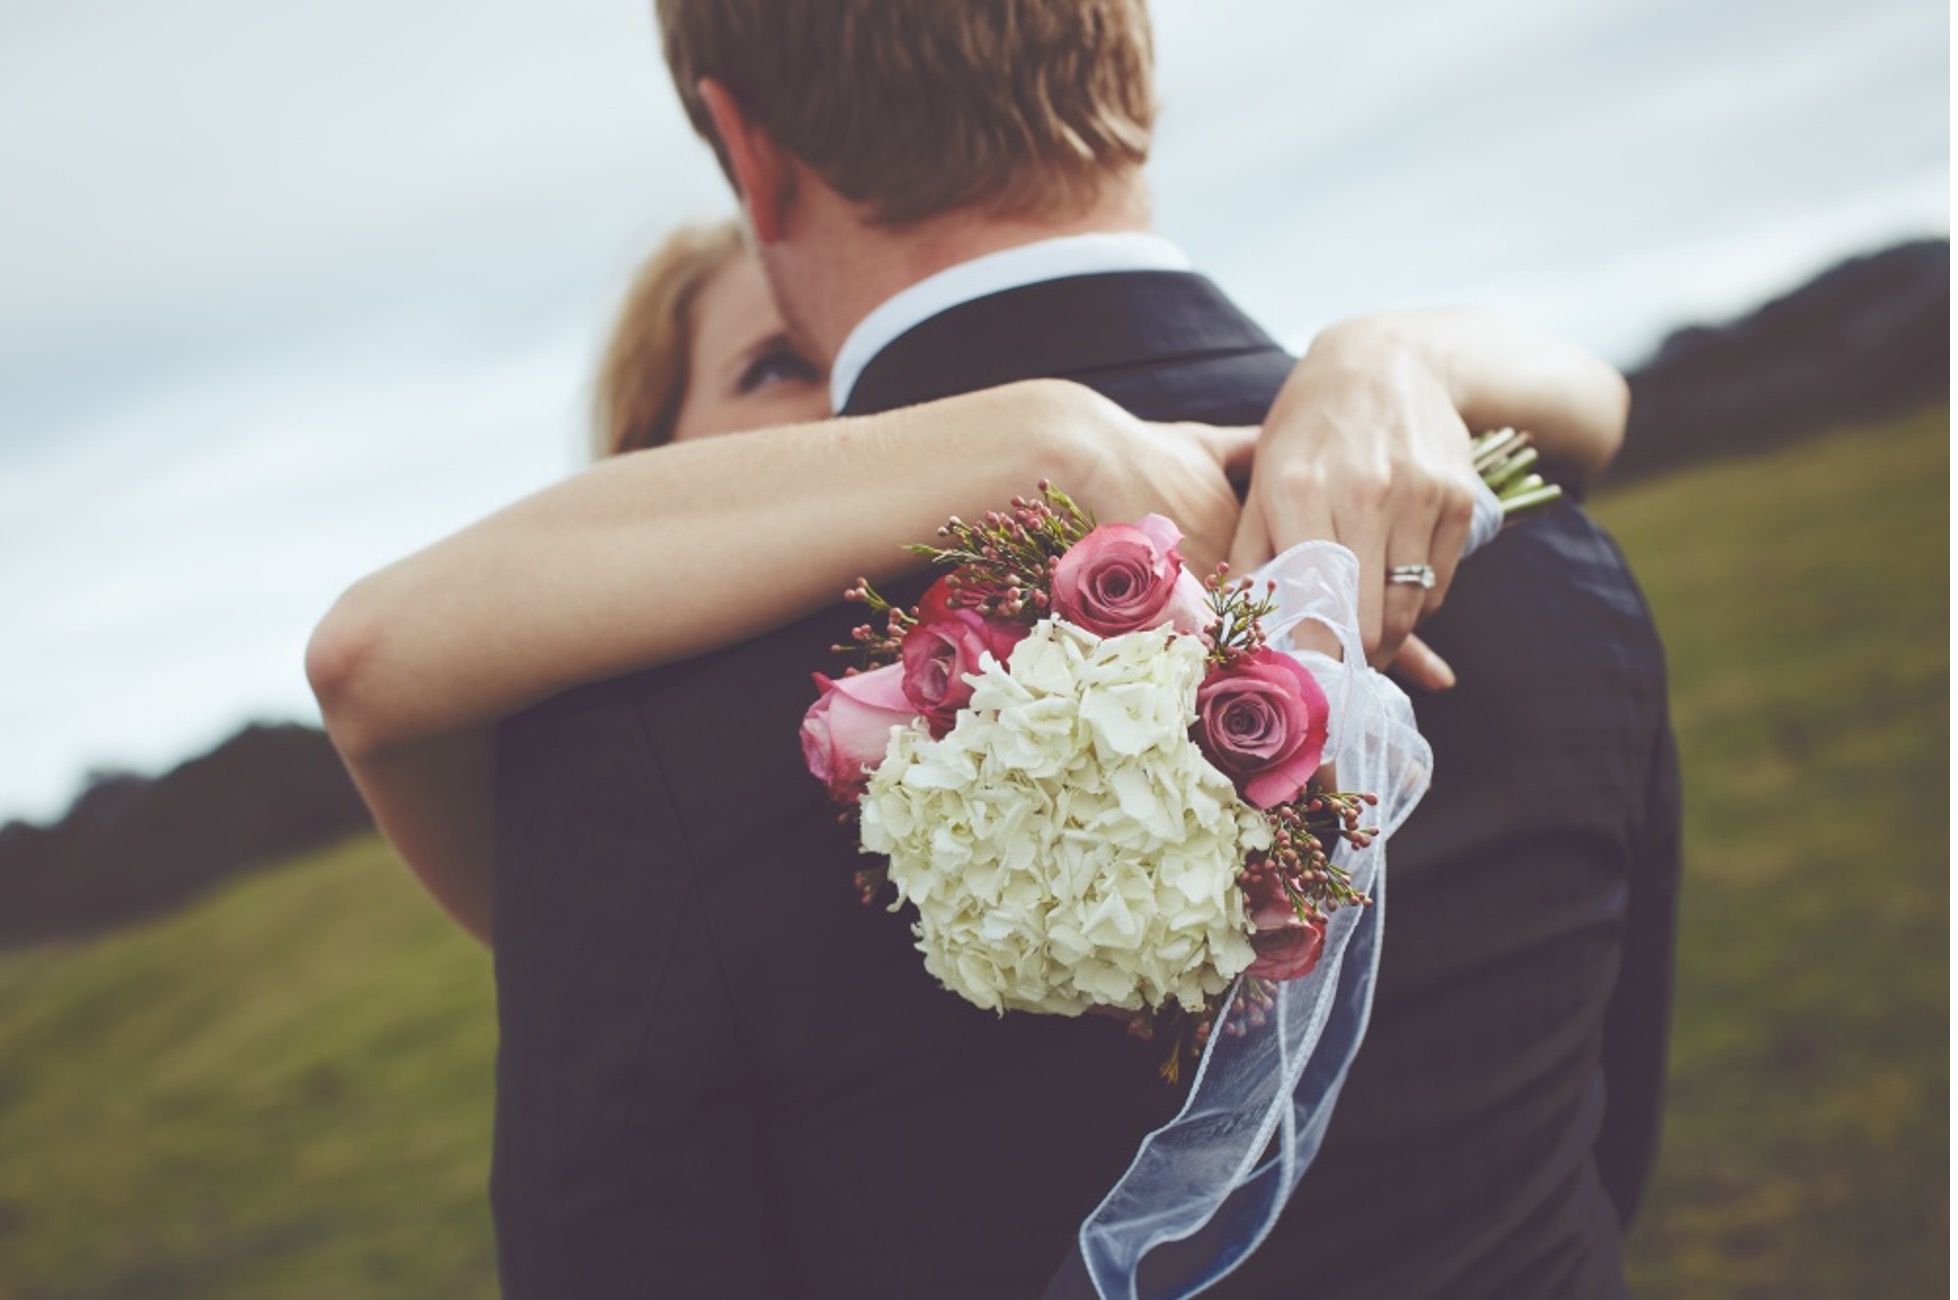 4 Common Wedding Flower Mistakes Couples Make